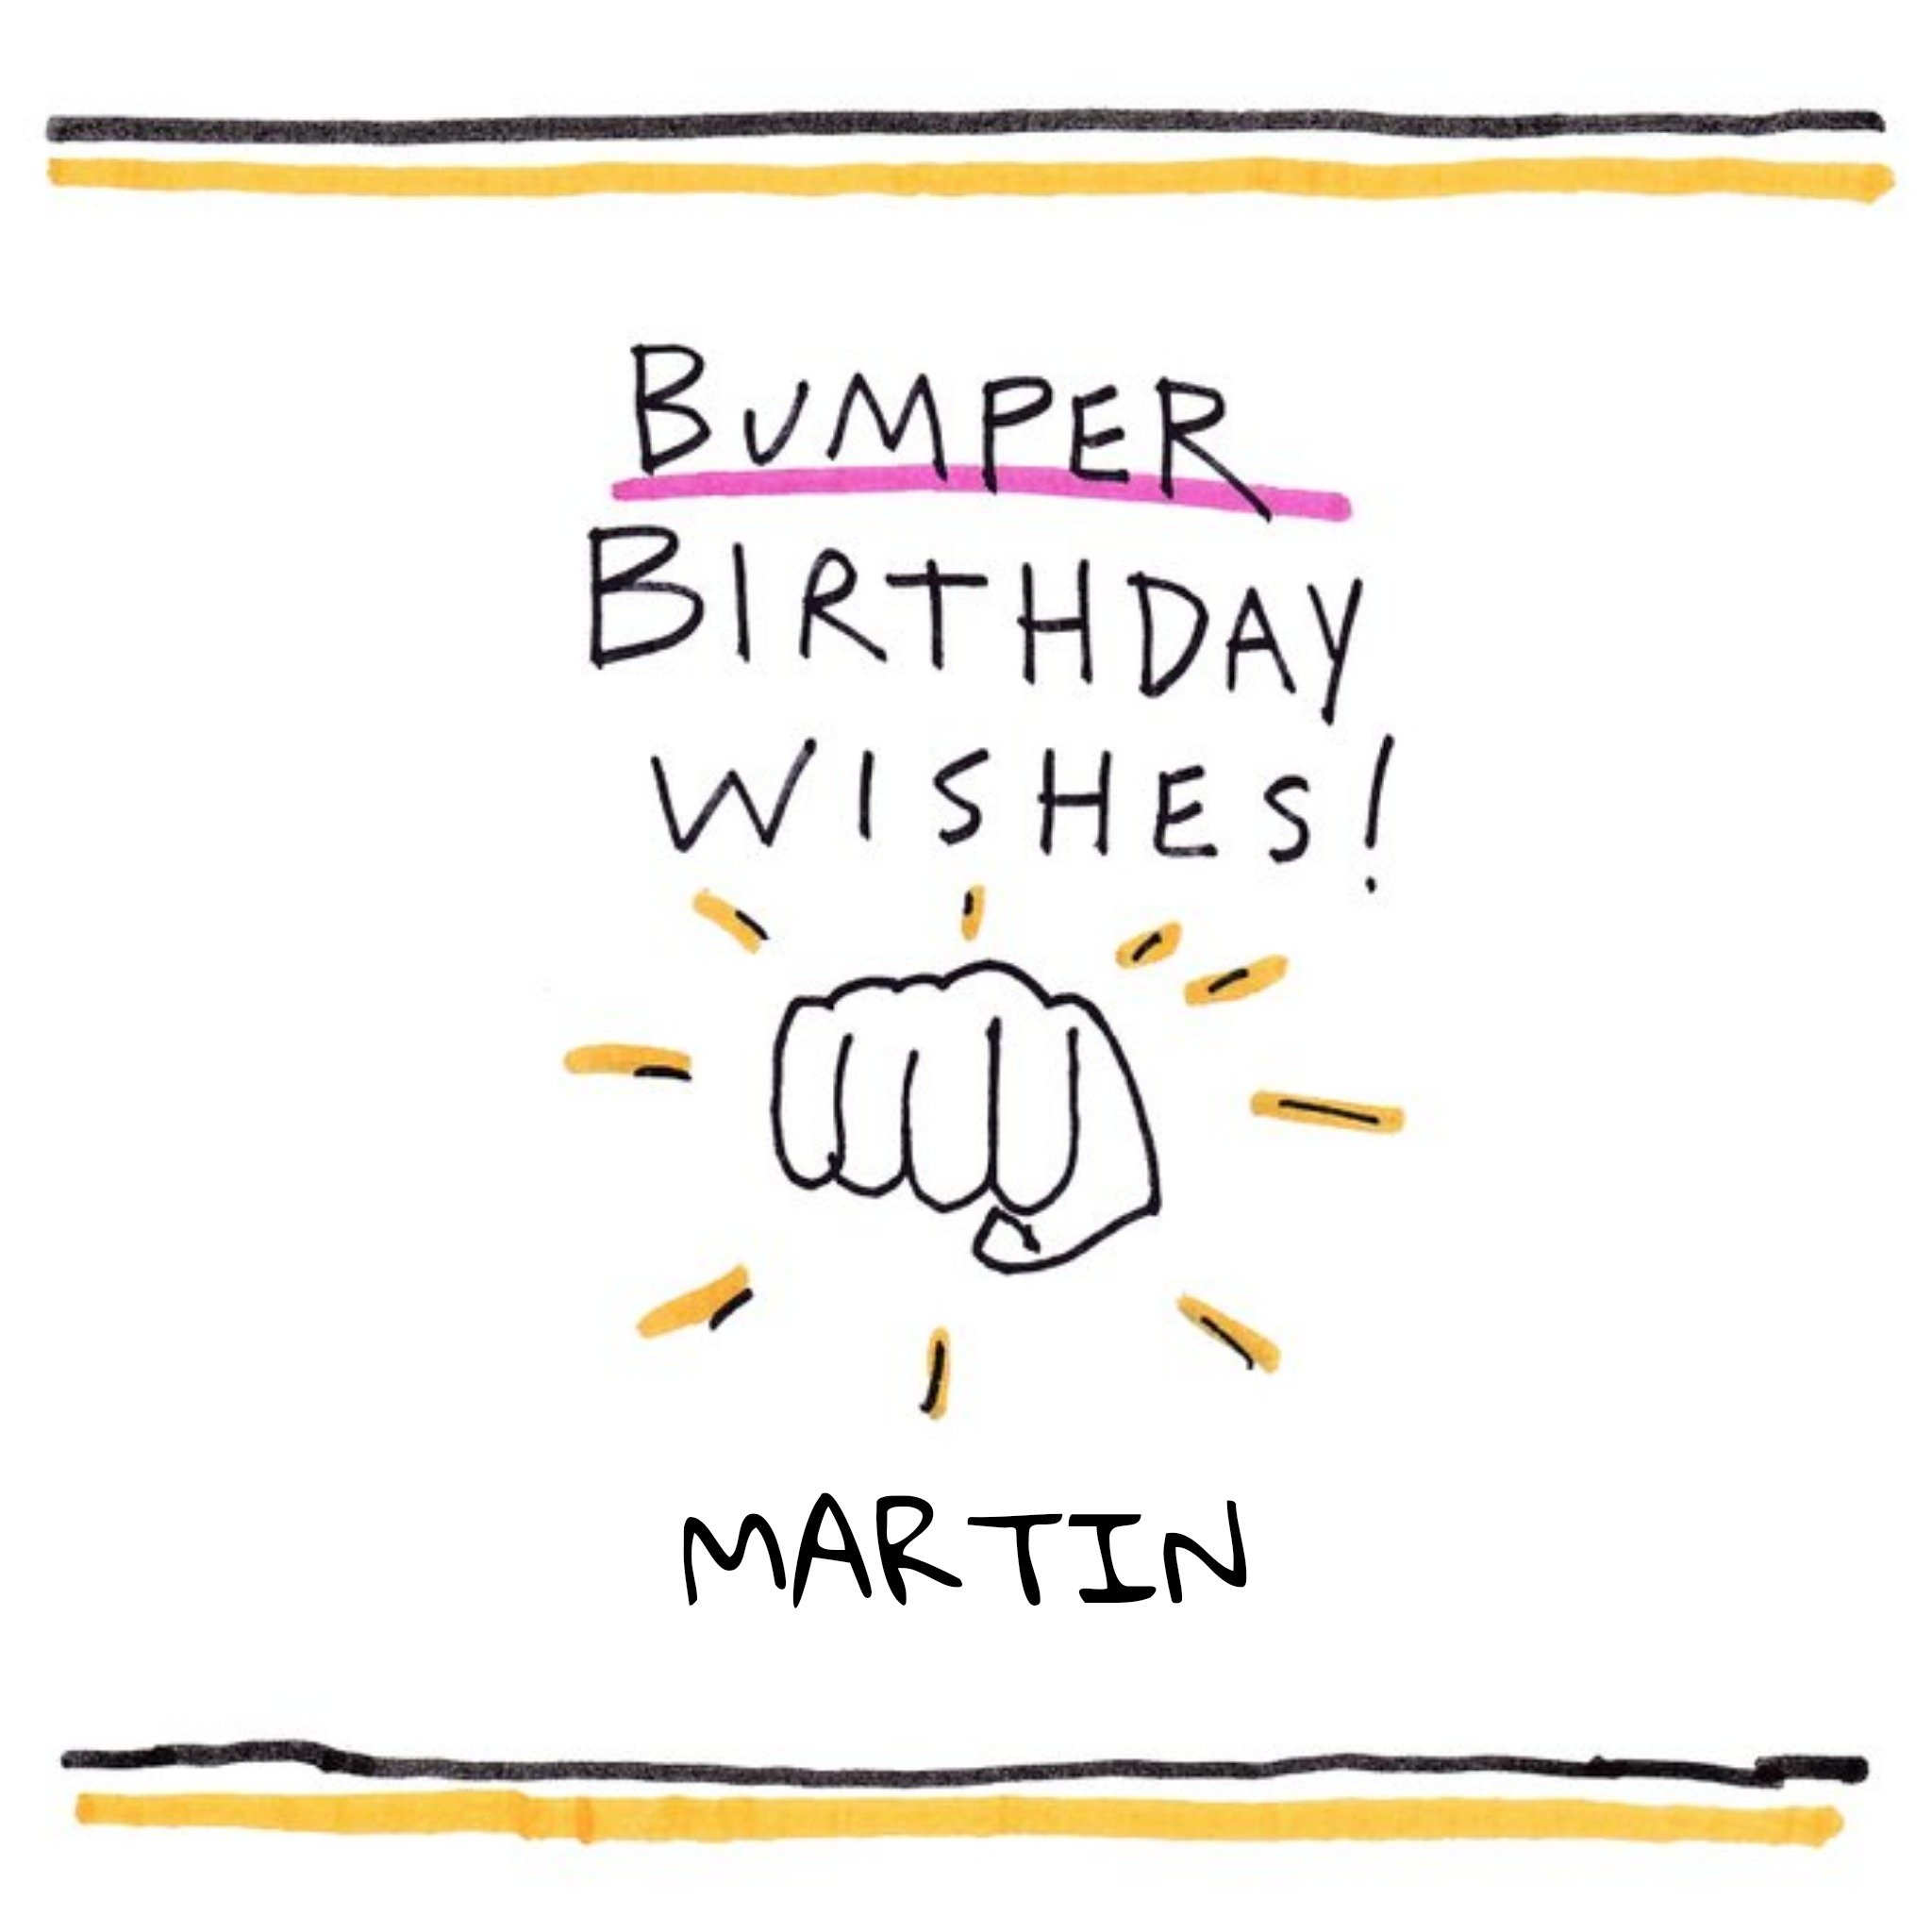 Moonpig Birthday Card - Fist Bump - Bumper Birthday Wishes - Illustration, Large